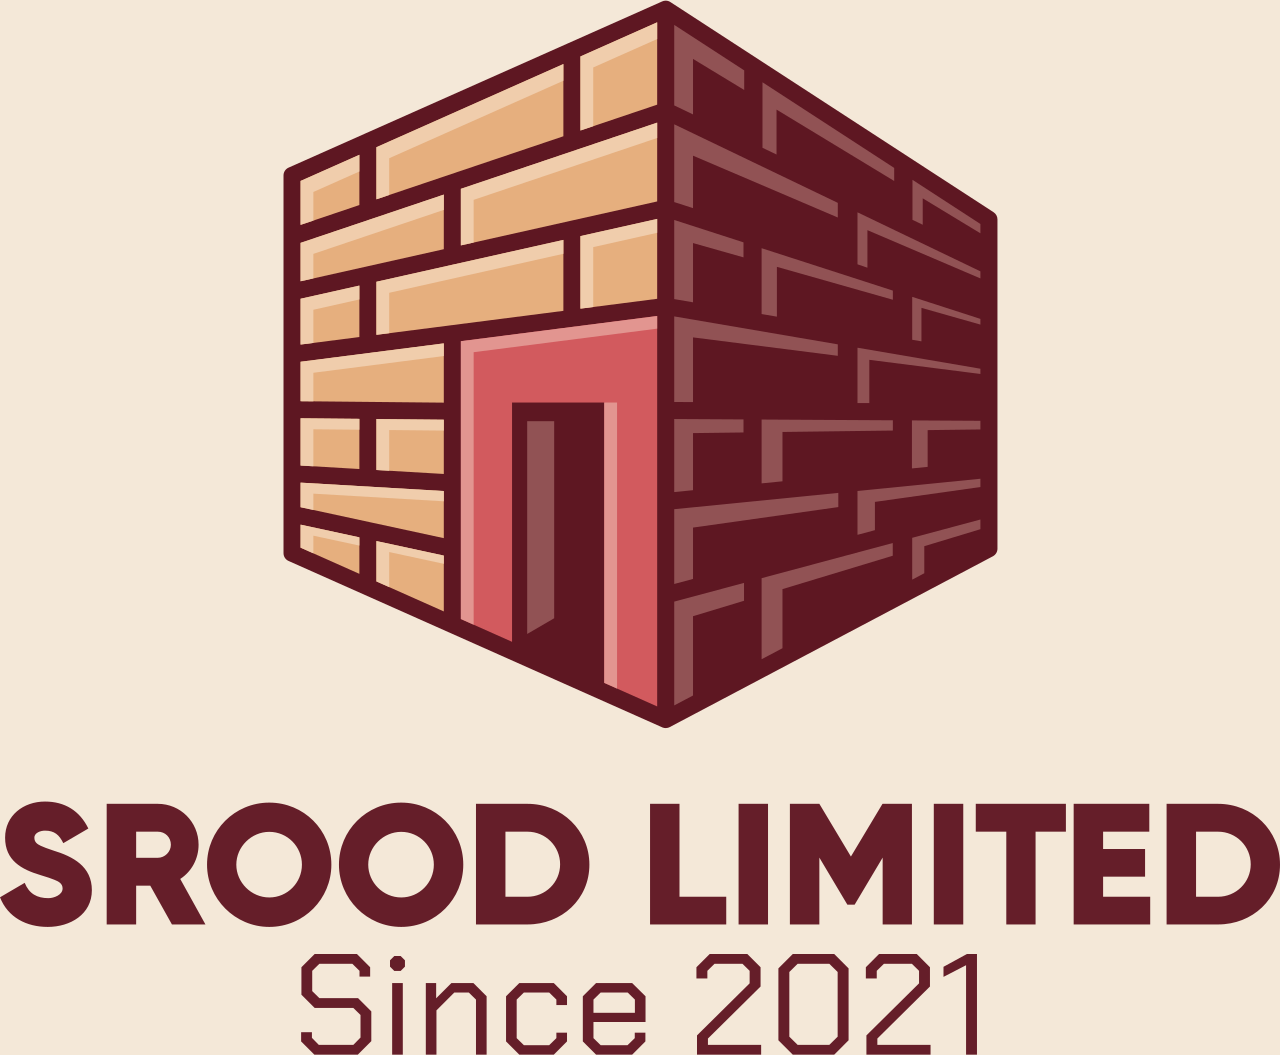 Srood limited's logo